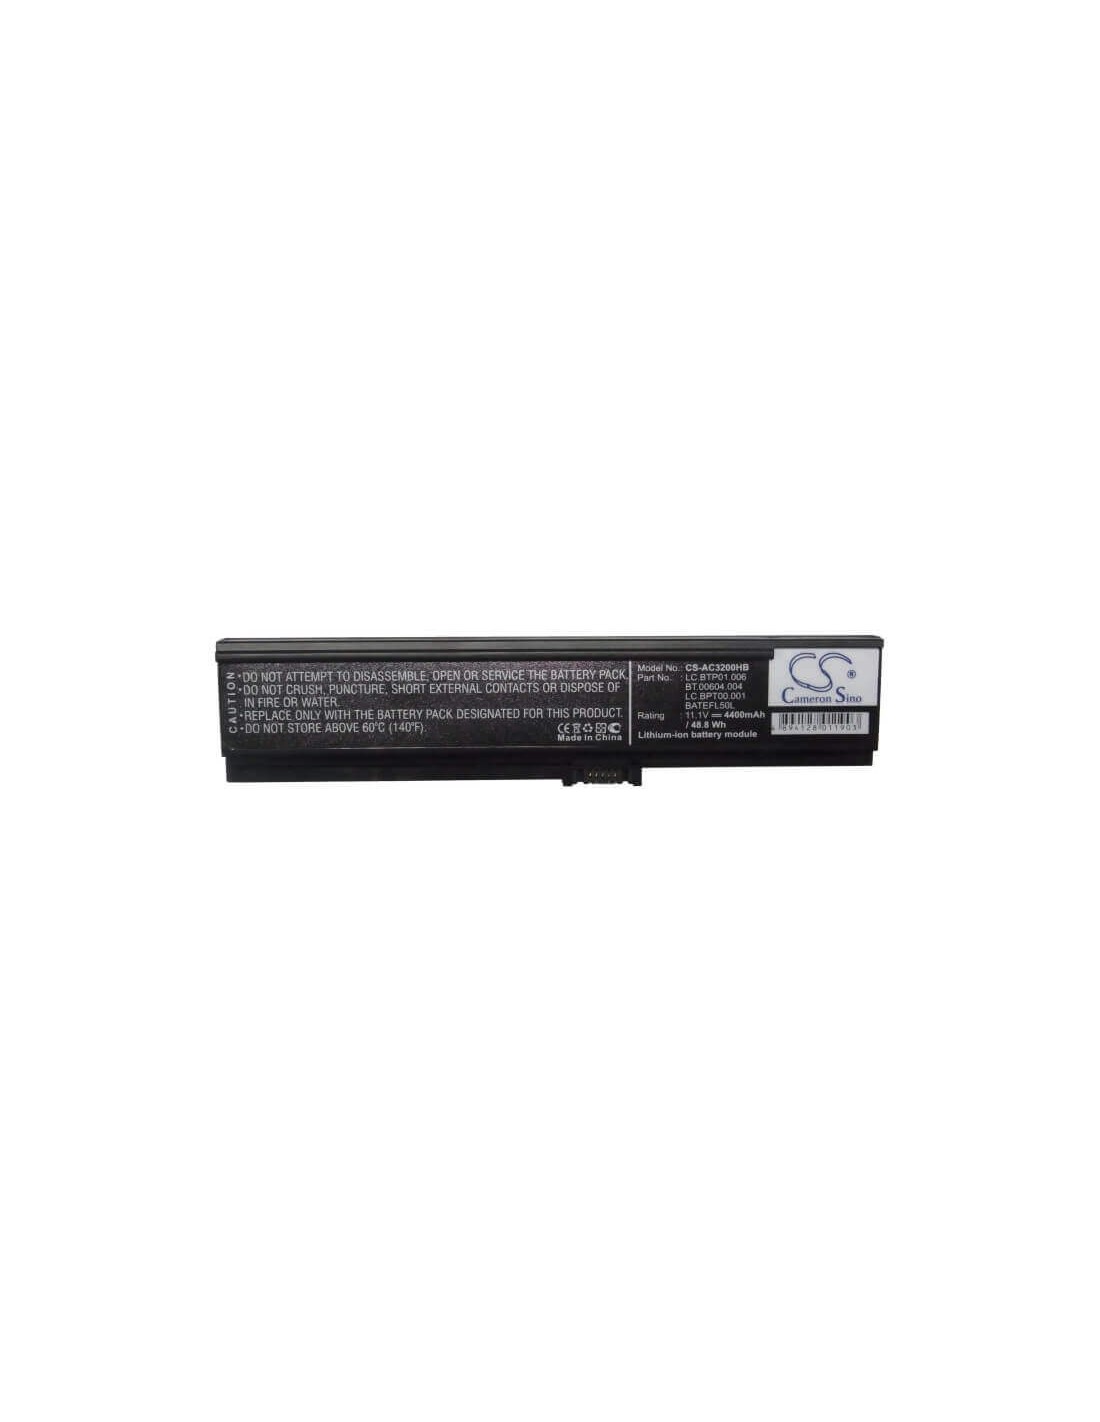 Black Battery for Acer As36802682, Aspire 3050, Aspire 3050-1733 11.1V, 4400mAh - 48.84Wh